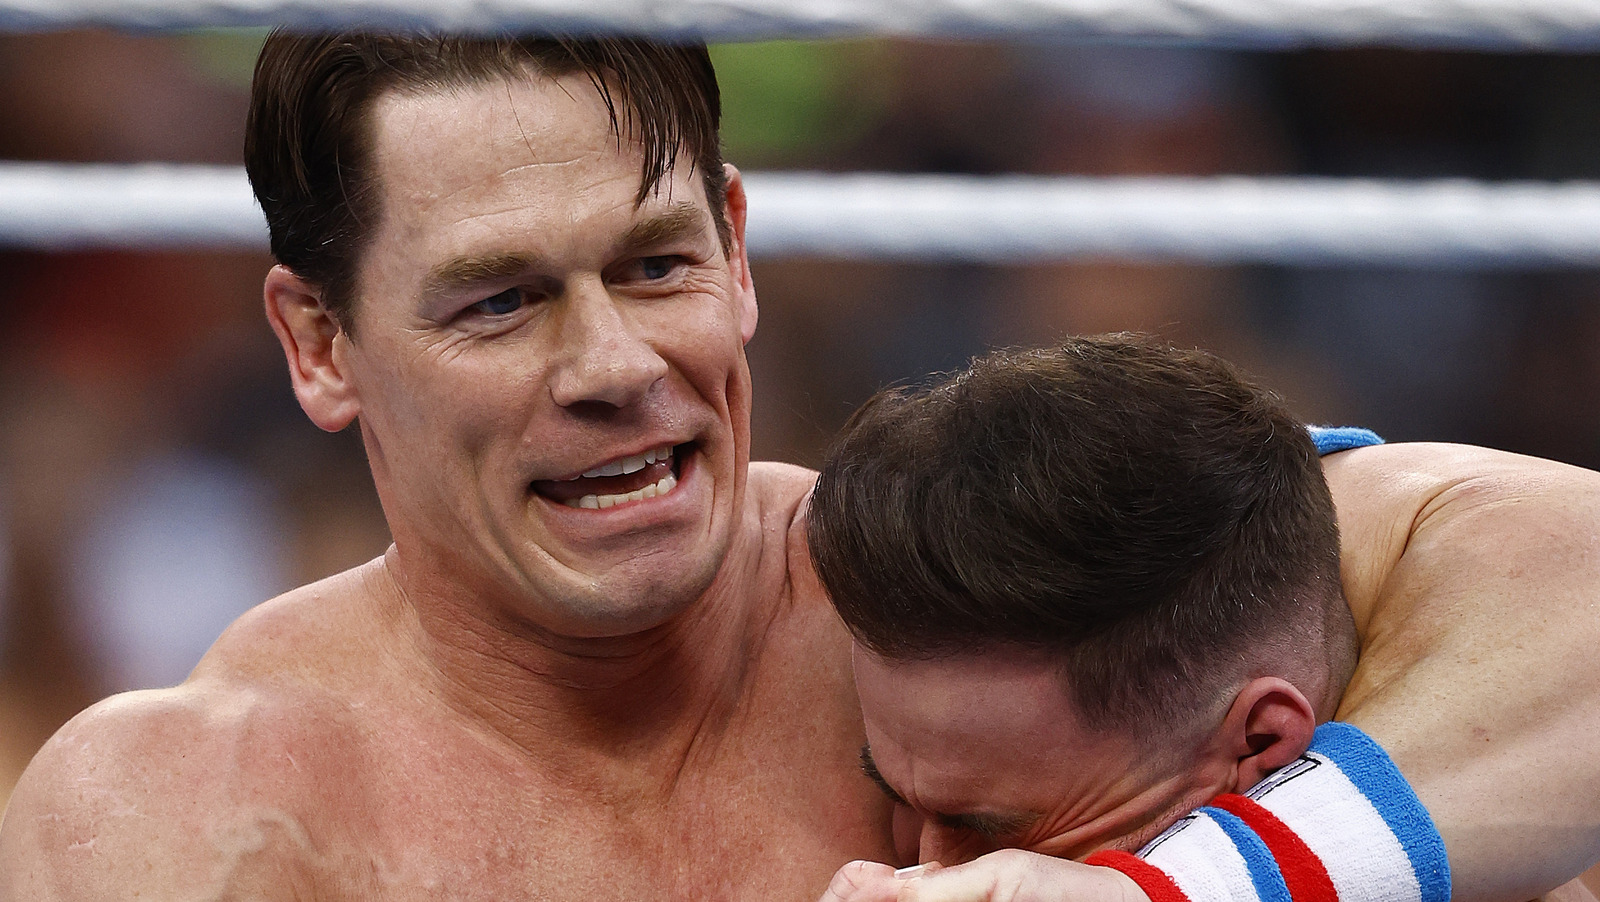 Paul Heyman On Why He Thinks John Cena Is A Real-Life Superhero - Wrestling...